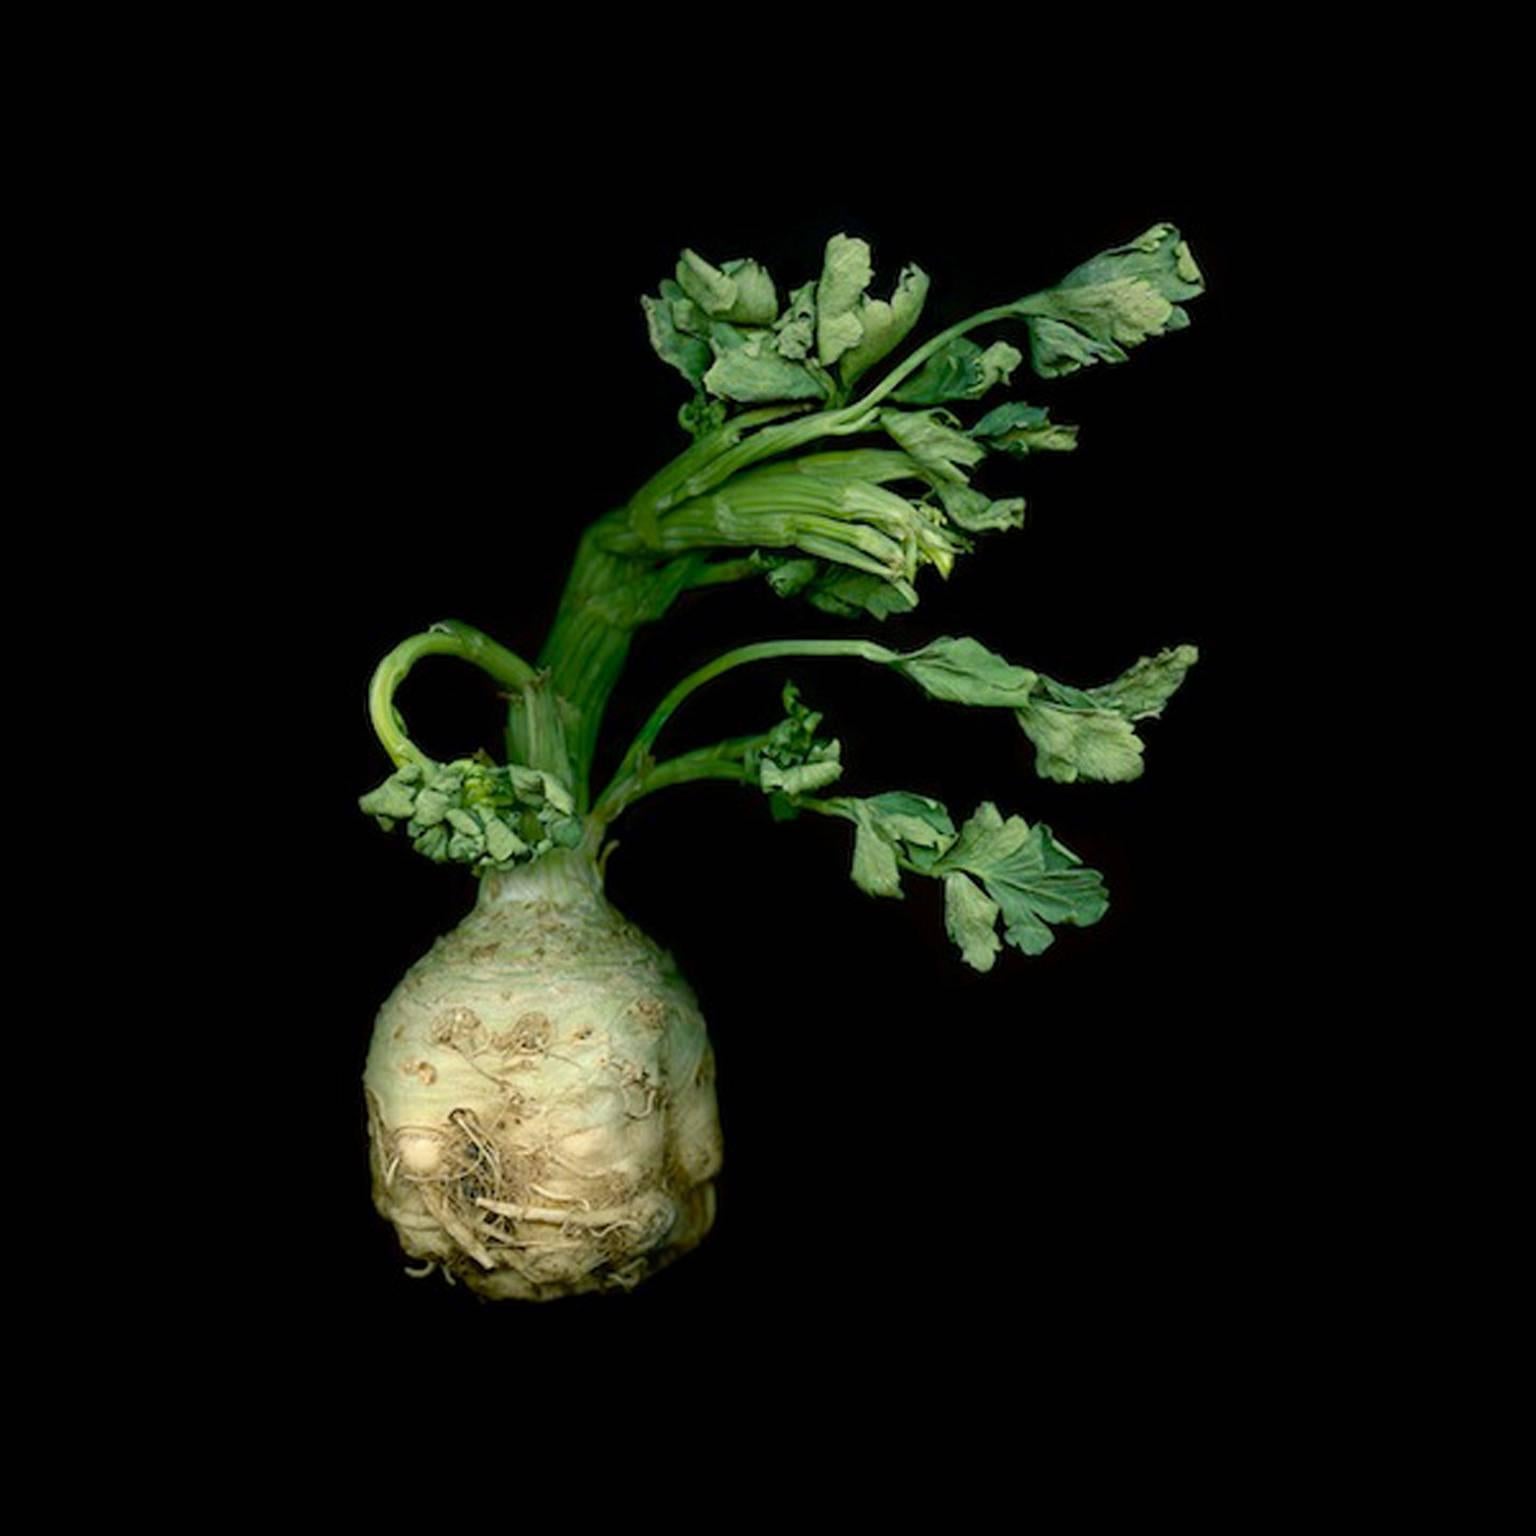 Jerry Freedner Still-Life Photograph - Celeriac 116 (Food Still Life Photograph of Green Vegetable on Black Background)